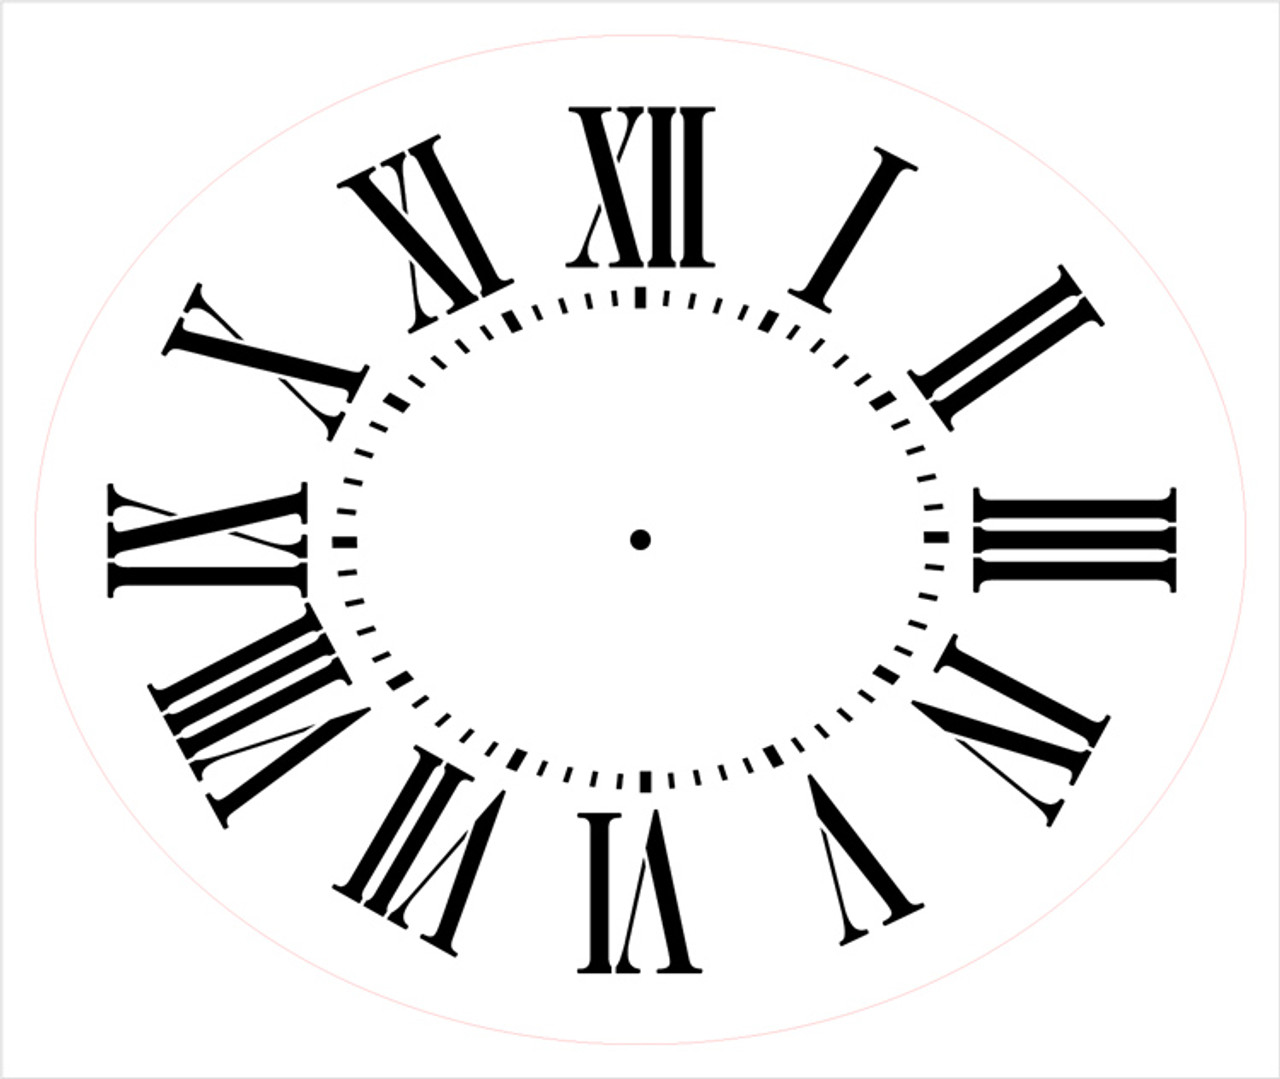 Antique Oval Clock Face Stencil - 14" x 11 5/8" - STCL2328_3 - by StudioR12